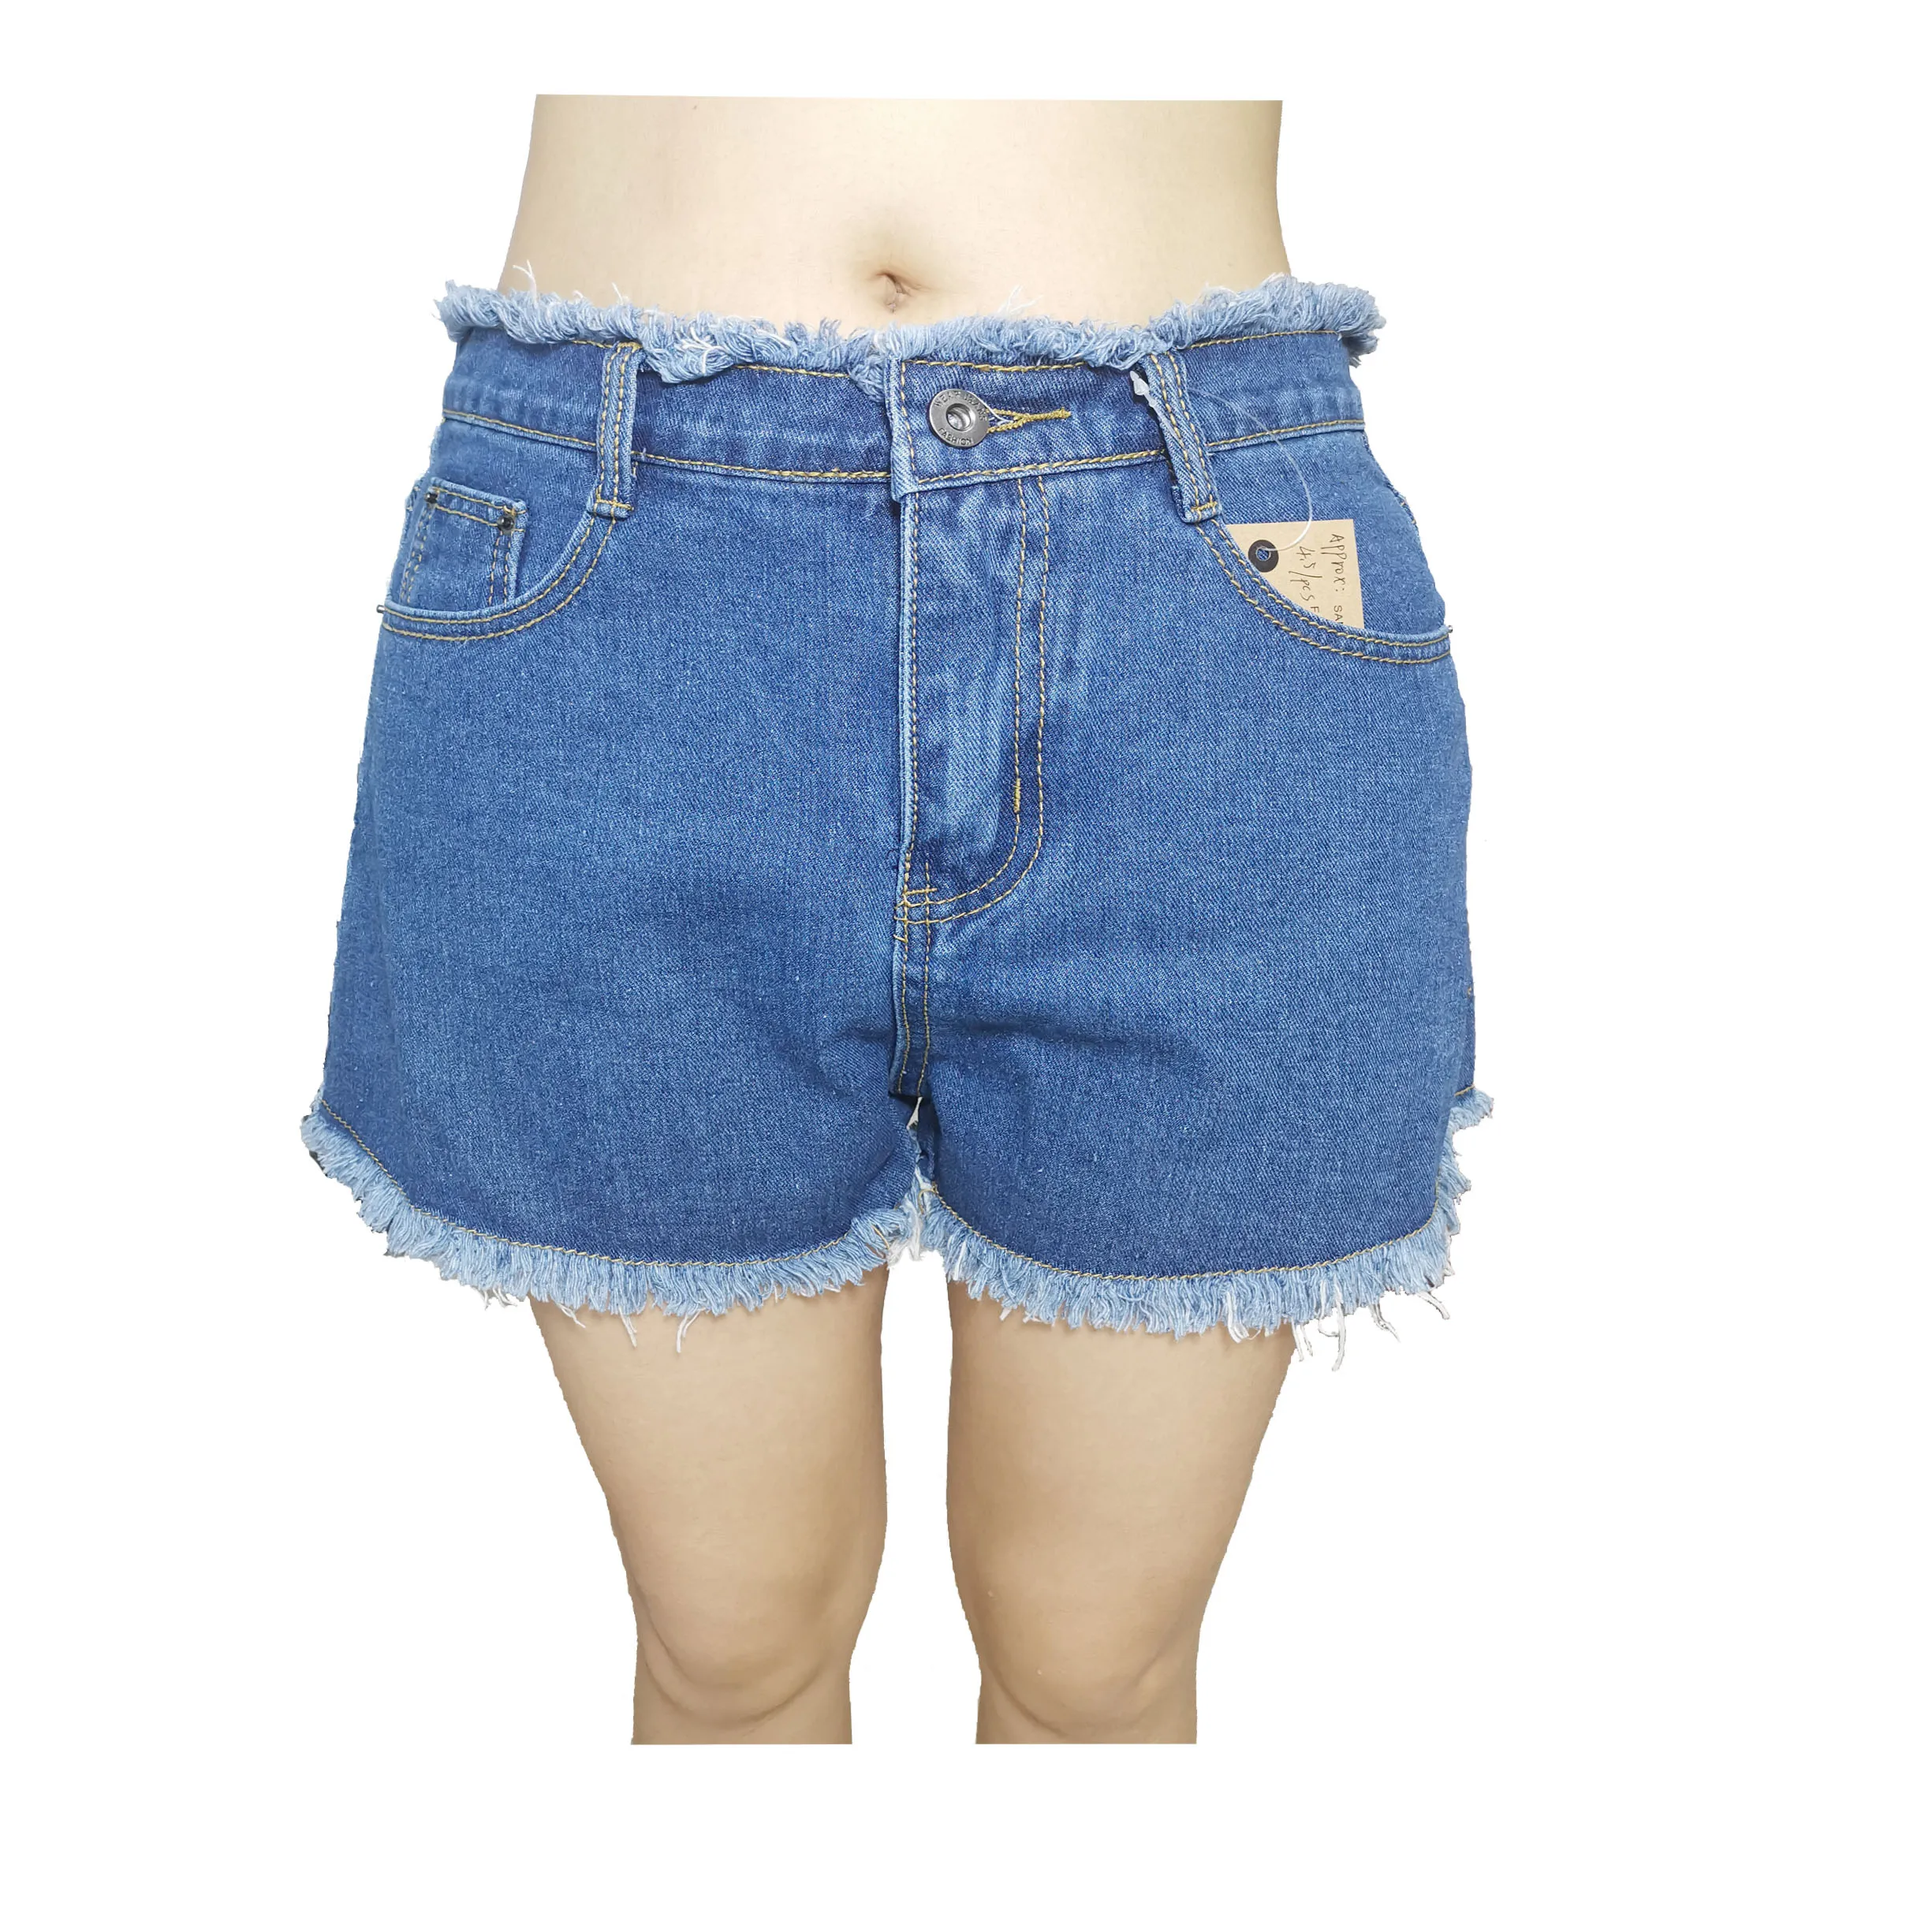 comprar shorts jeans barato online